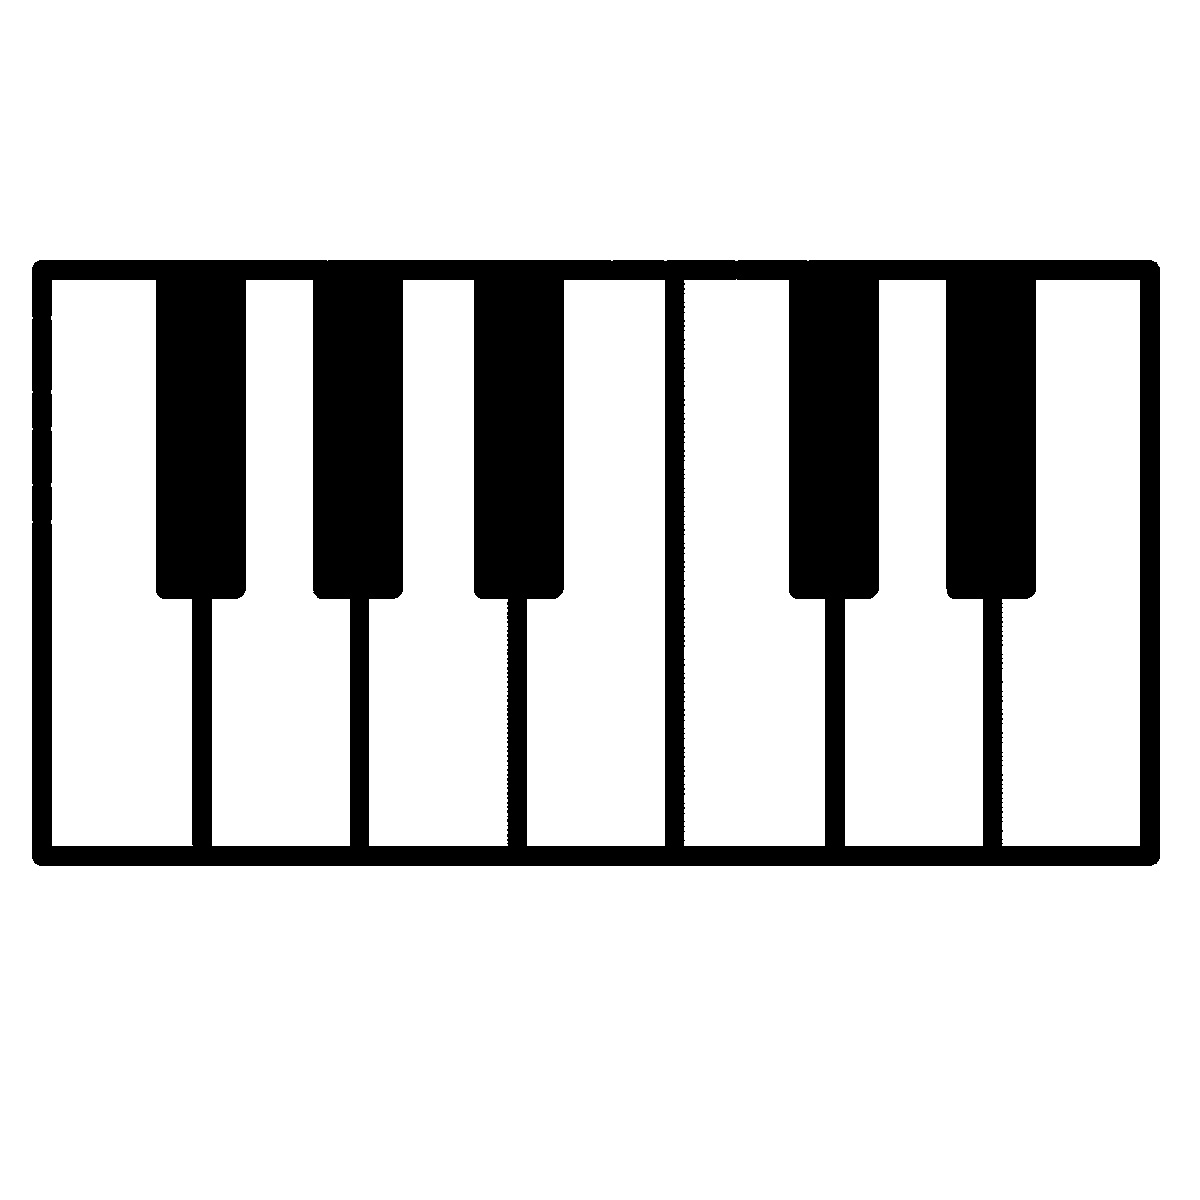 Cartoon Keyboard Piano - ClipArt Best